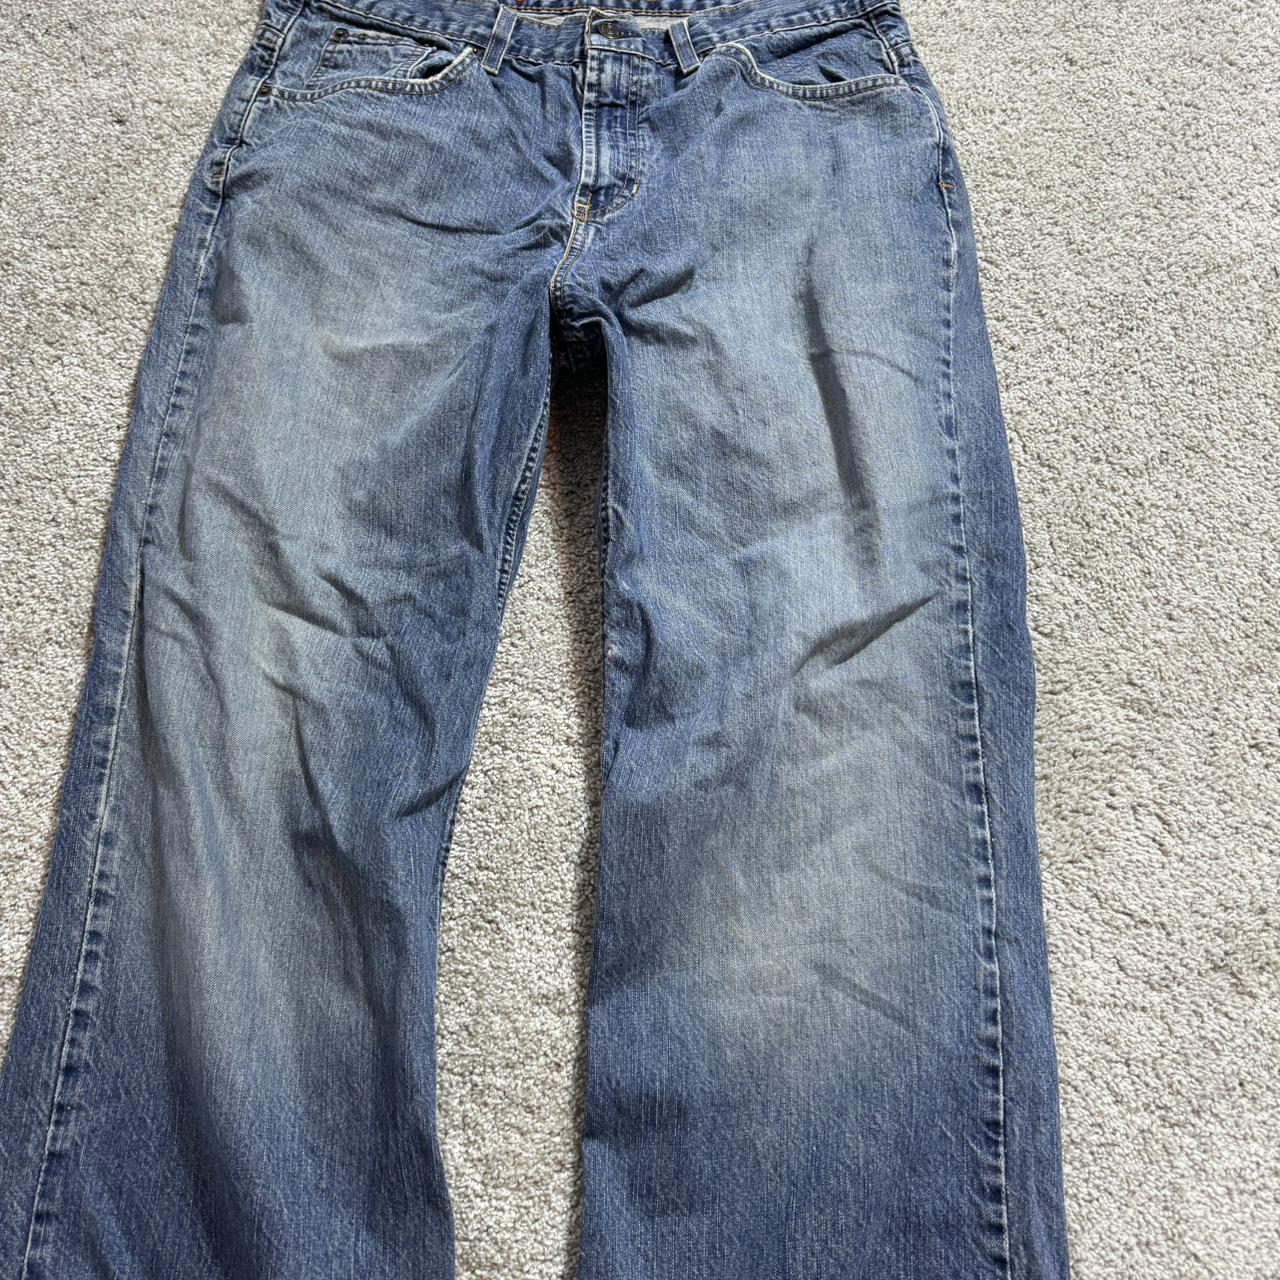 Vintage faded, bullhead, baggy jnco style jeans So... - Depop